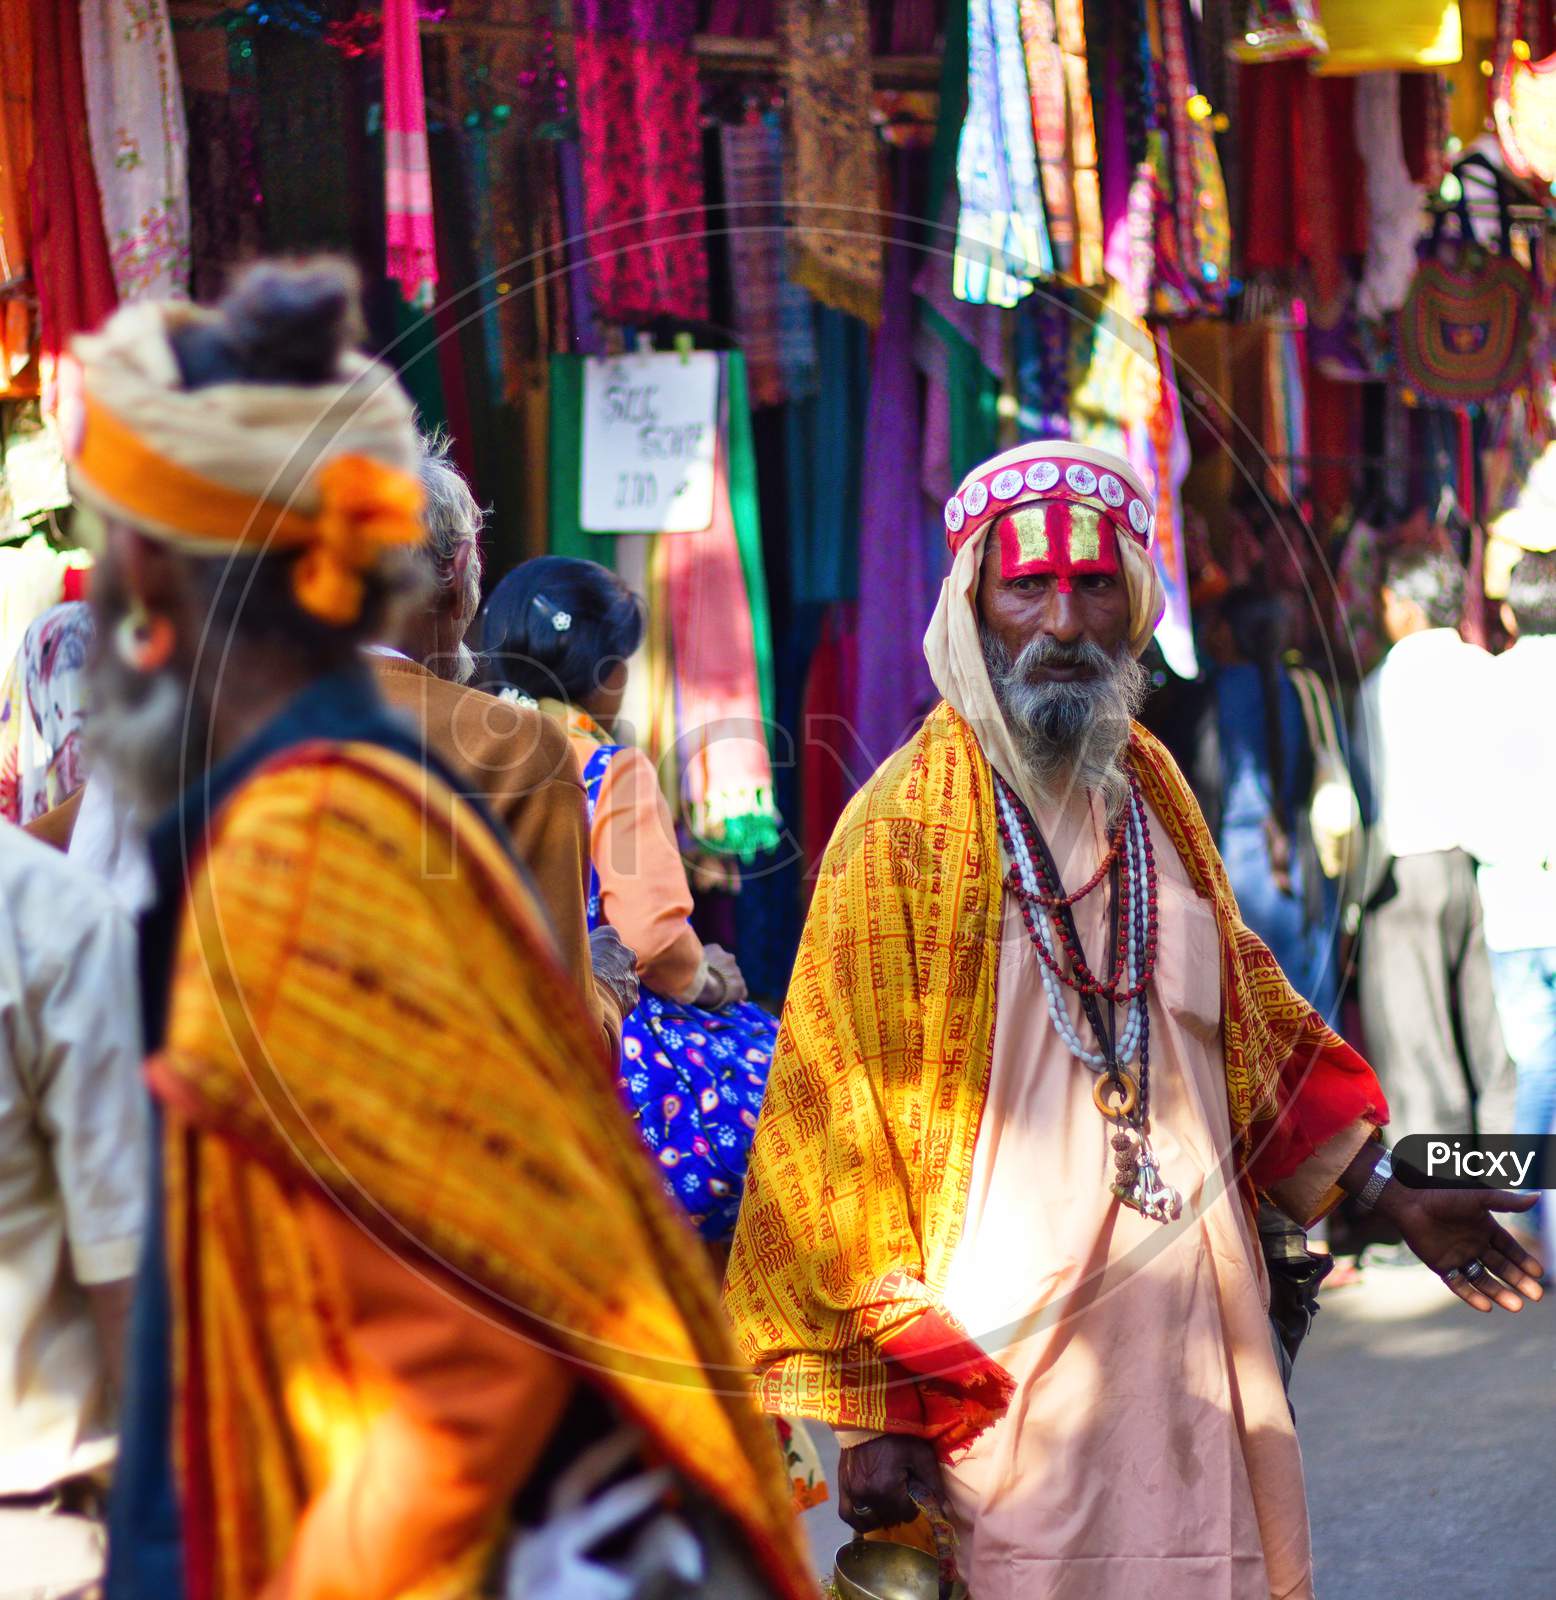 Pushkar, India - November 10, 2016: A Bearded Hindu Old Man With Vishnu Tilak On His Forehead And Orange Ethnic Wear Walking In Famous Pushkar Mela Or Fair In The State Of Rajasthan